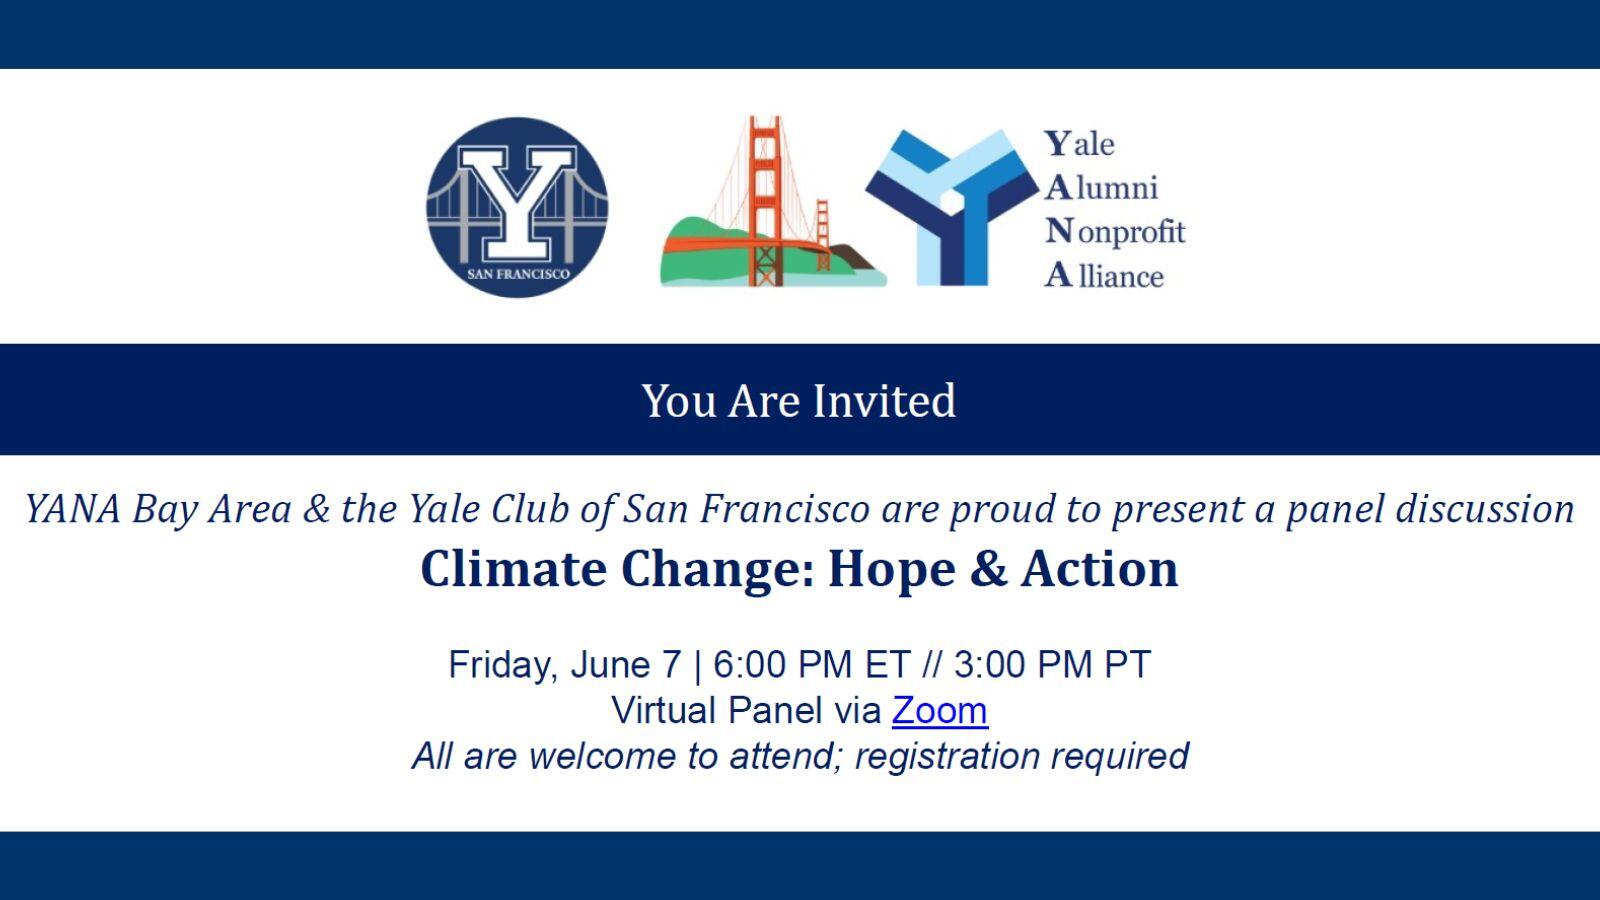 Climate Change: Hope & Action hosted by Yale Alumni Nonprofit Alliance (YANA) & the Yale Club of San Francisco